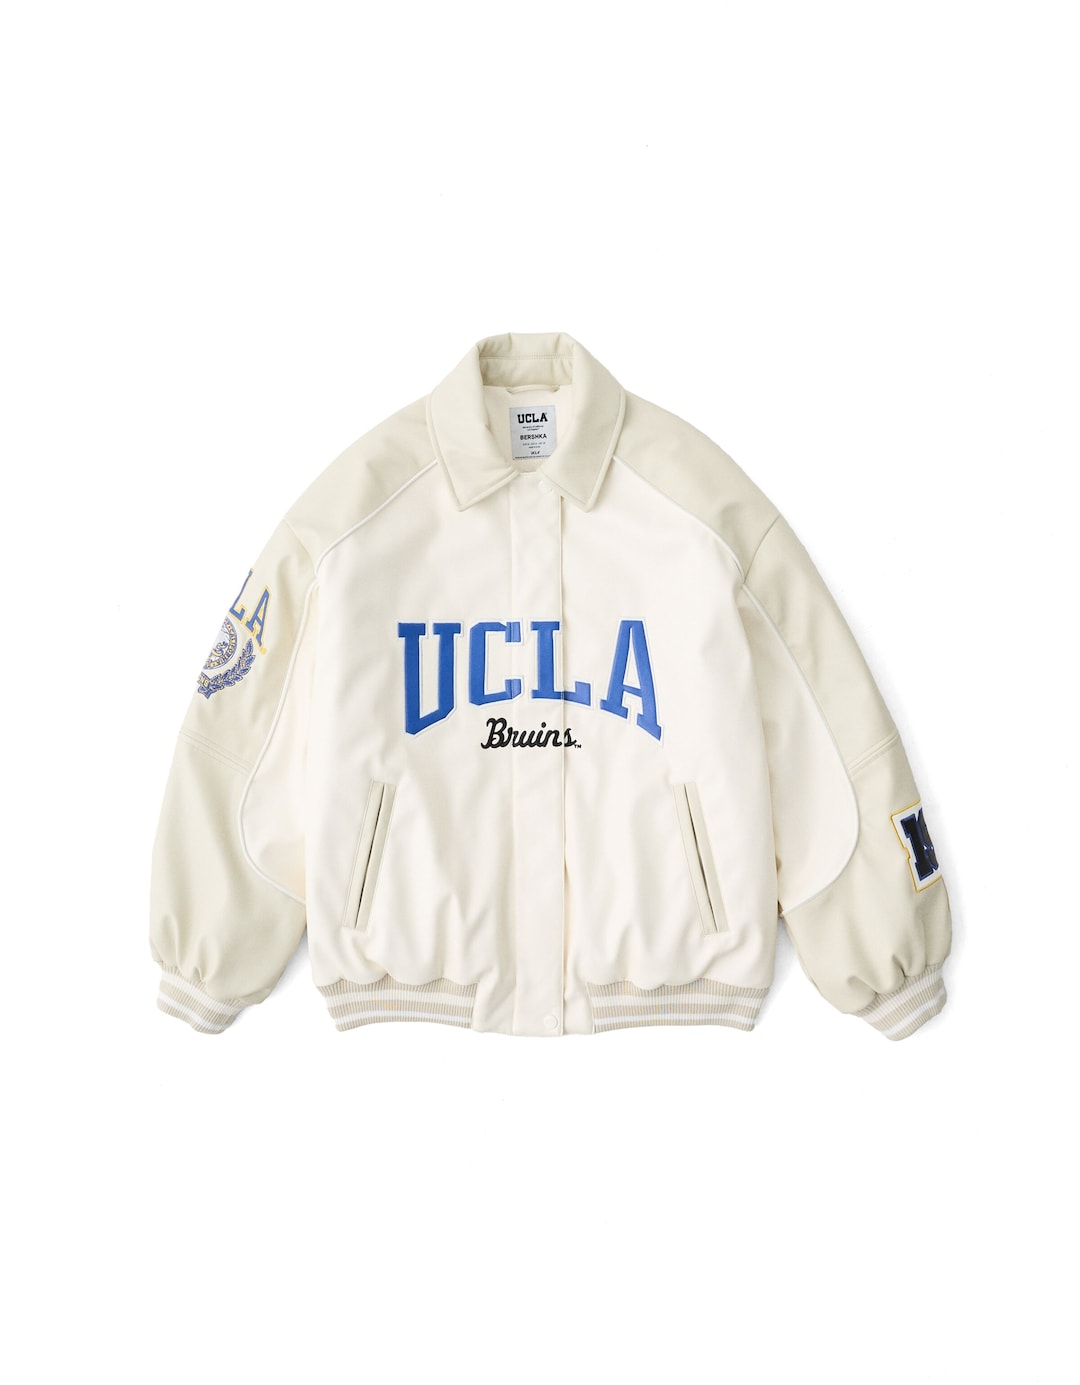 Leather effect embroidered UCLA jacket